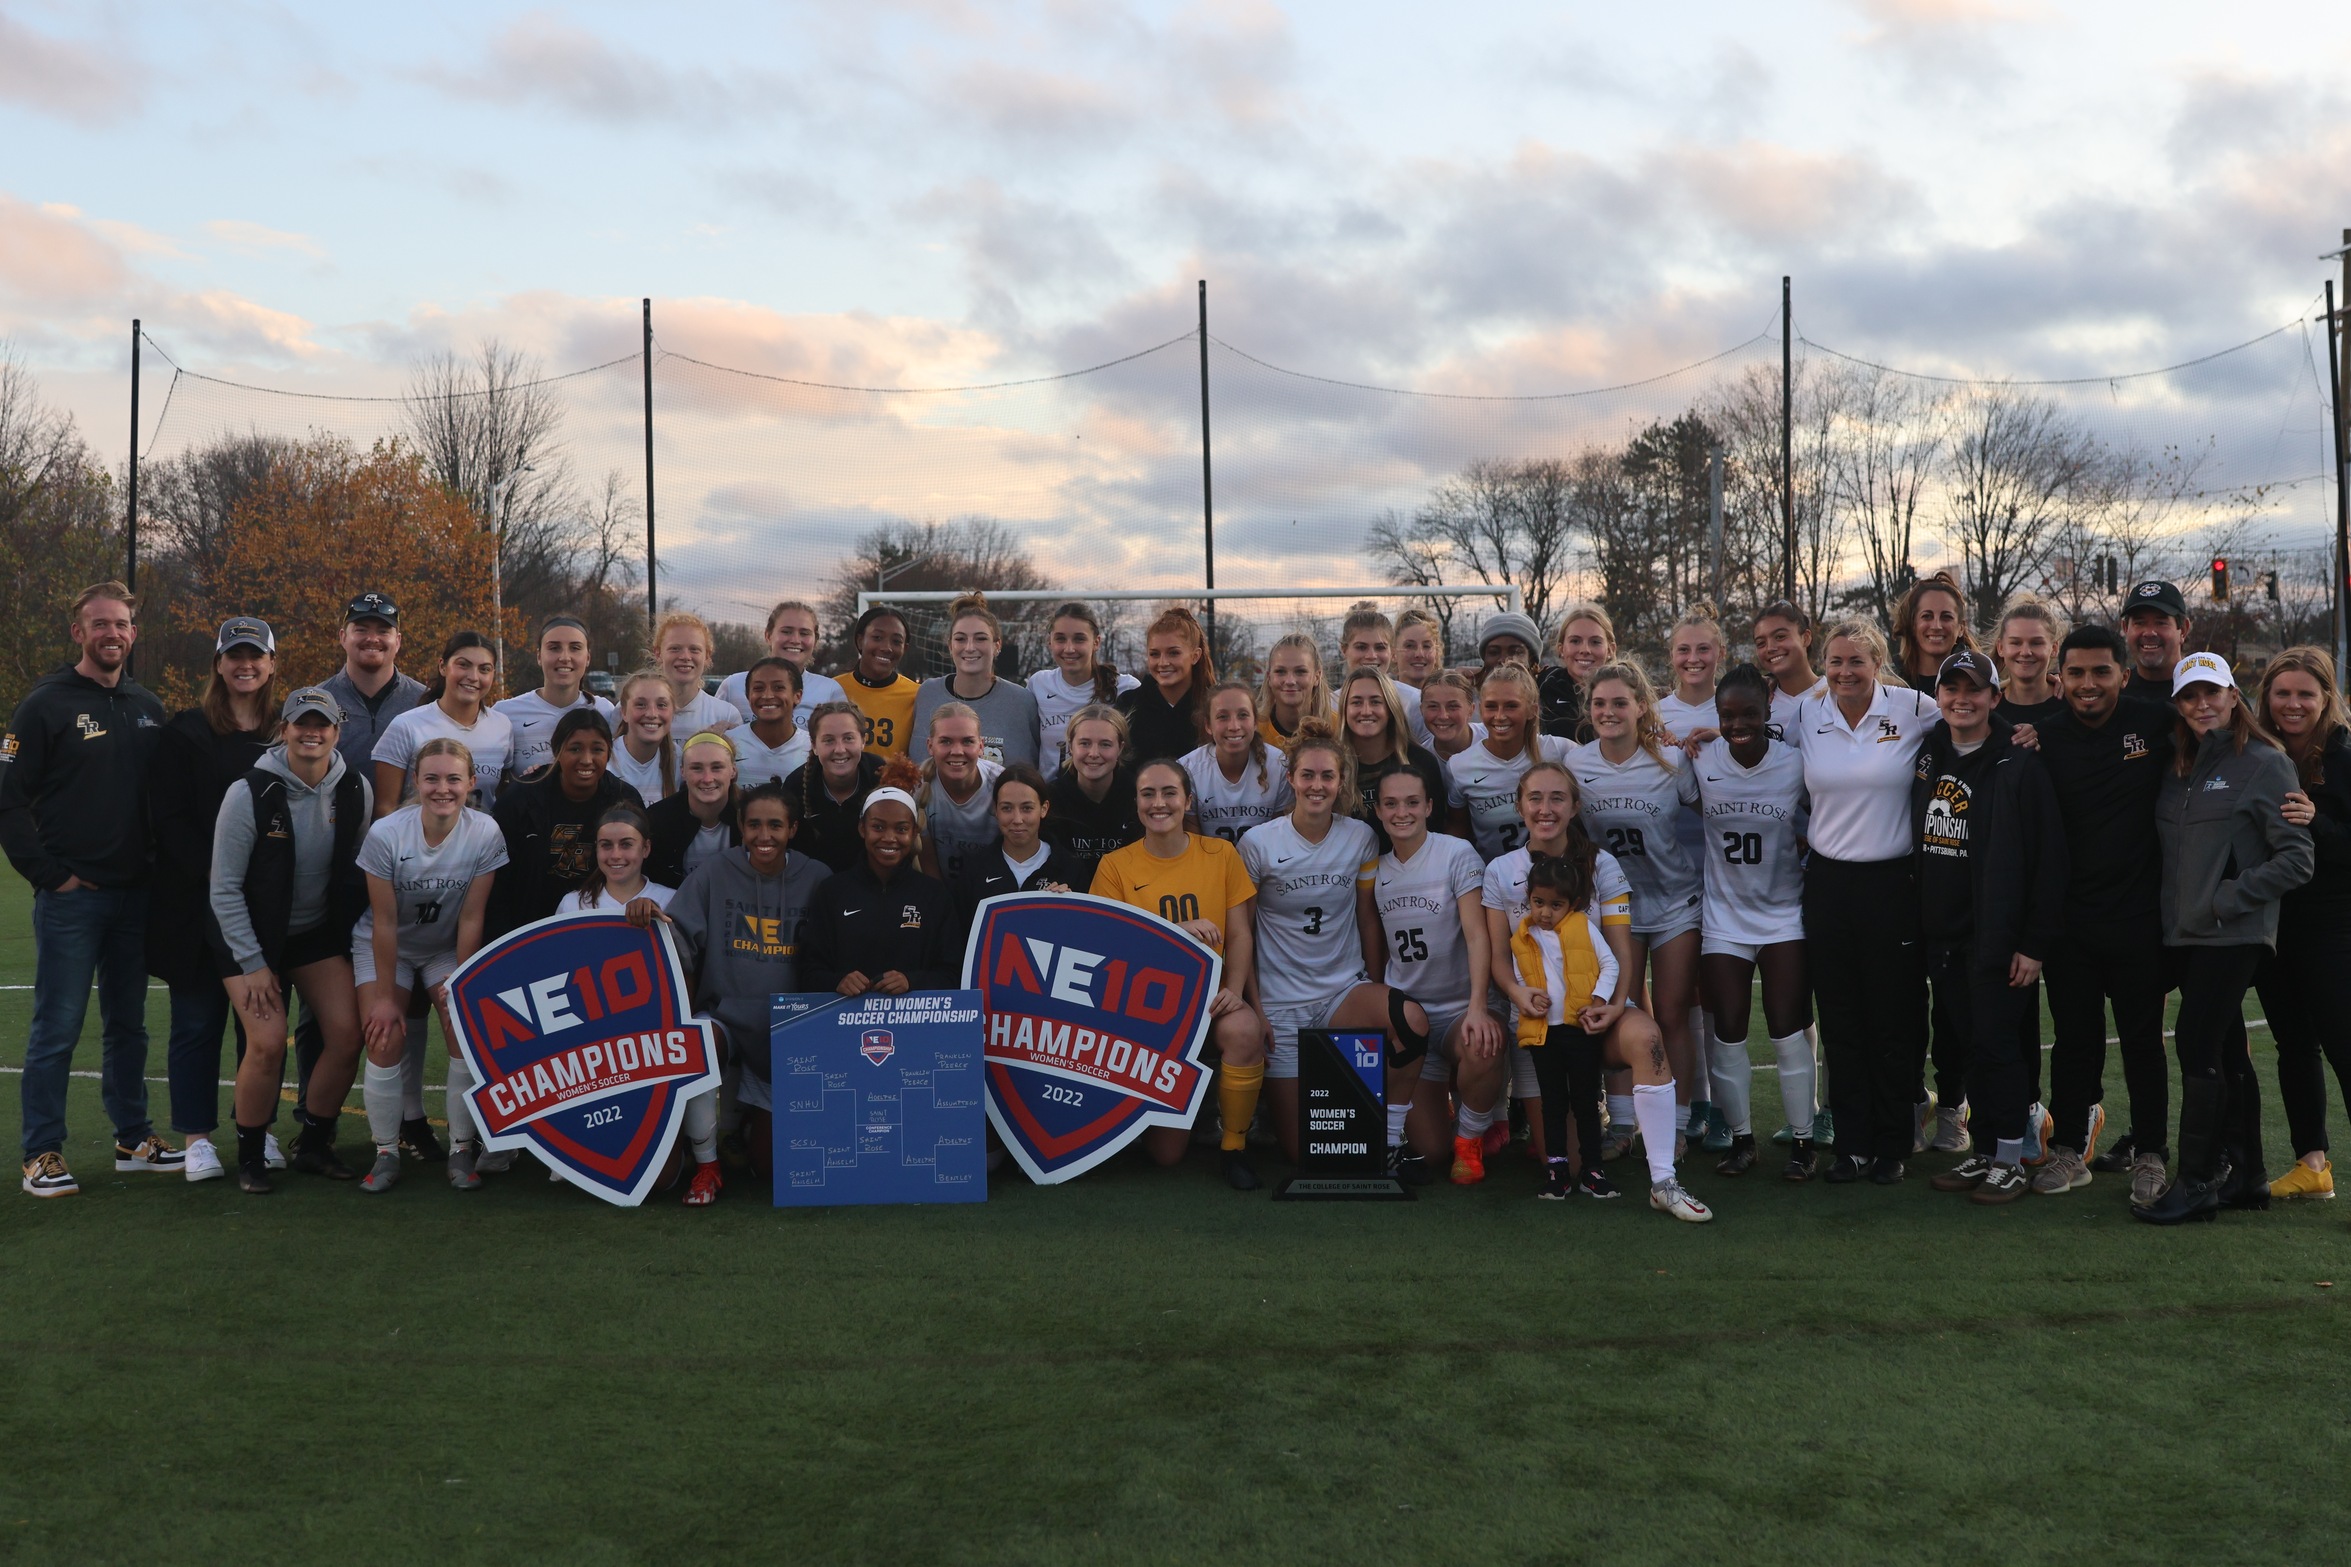 THREE-PEAT! Saint Rose Clinches Third Consecutive NE10 Women's Soccer Title